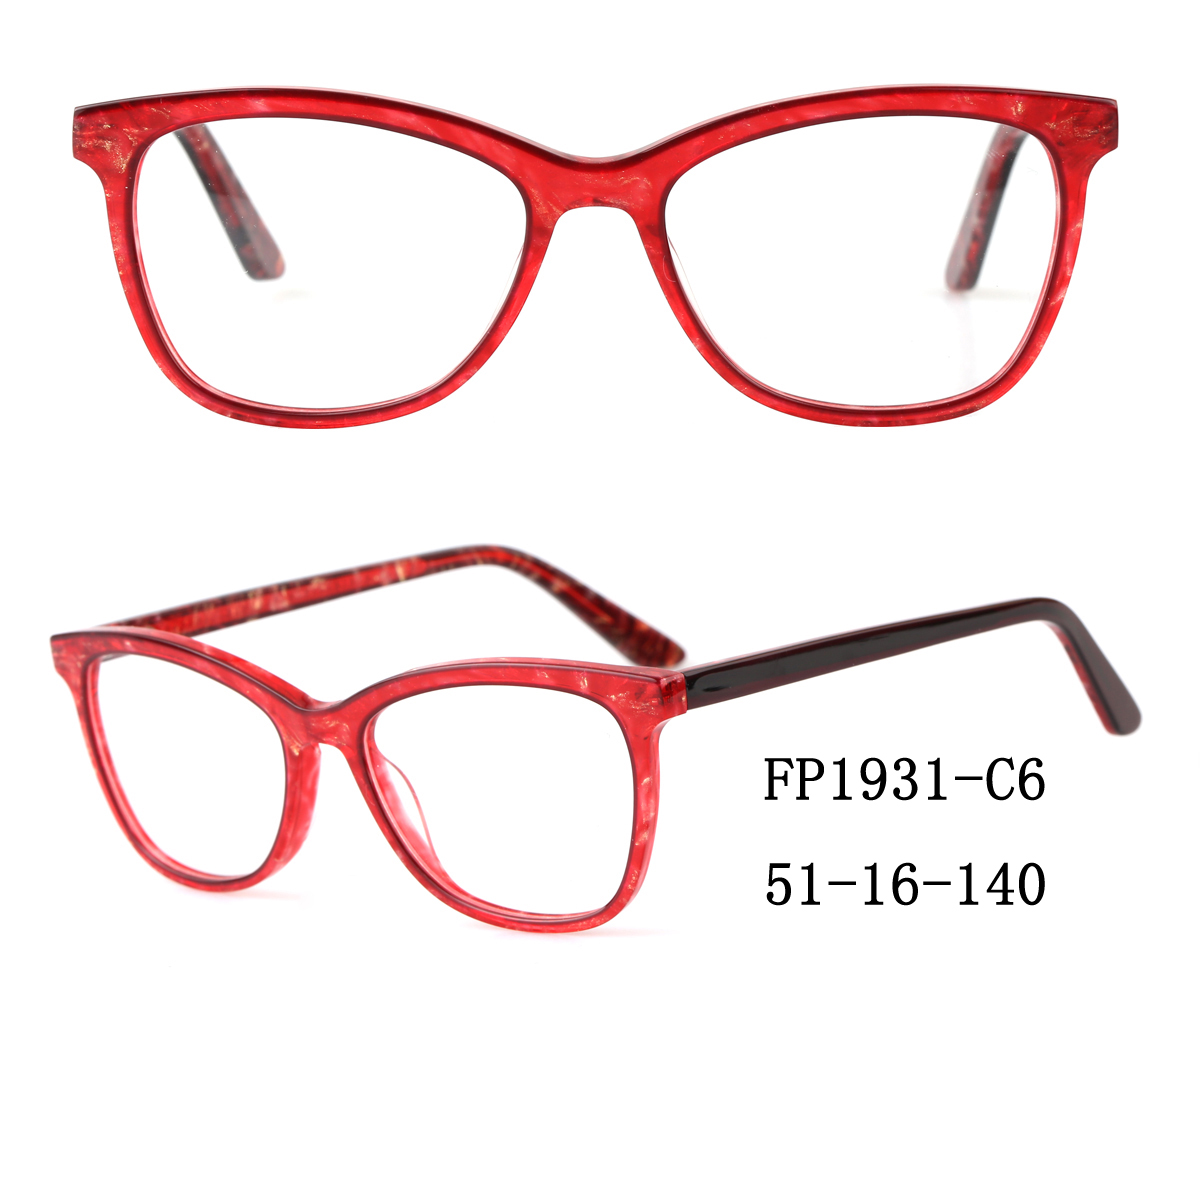 Handmade Acetate Eyeglass Frames In Stock-Popeyewear